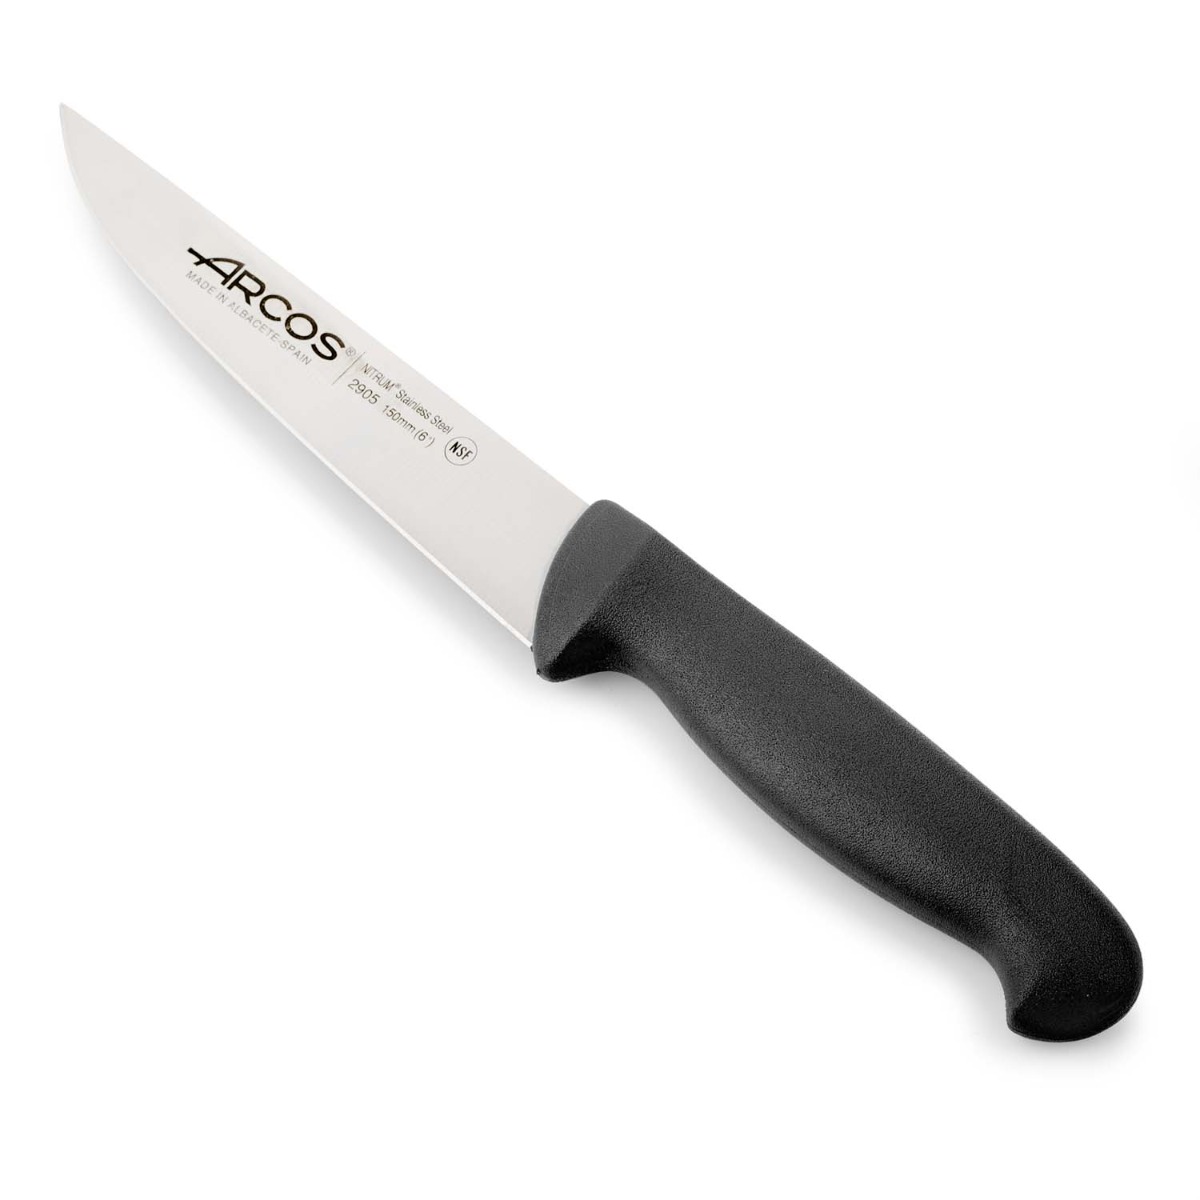 Arcos - Arcos Serie 2900 - Cuchillo Cocina - Hoja de Acero Inoxidable NITRUM de 150 mm - Mango inyectado en Polipropileno Color negro